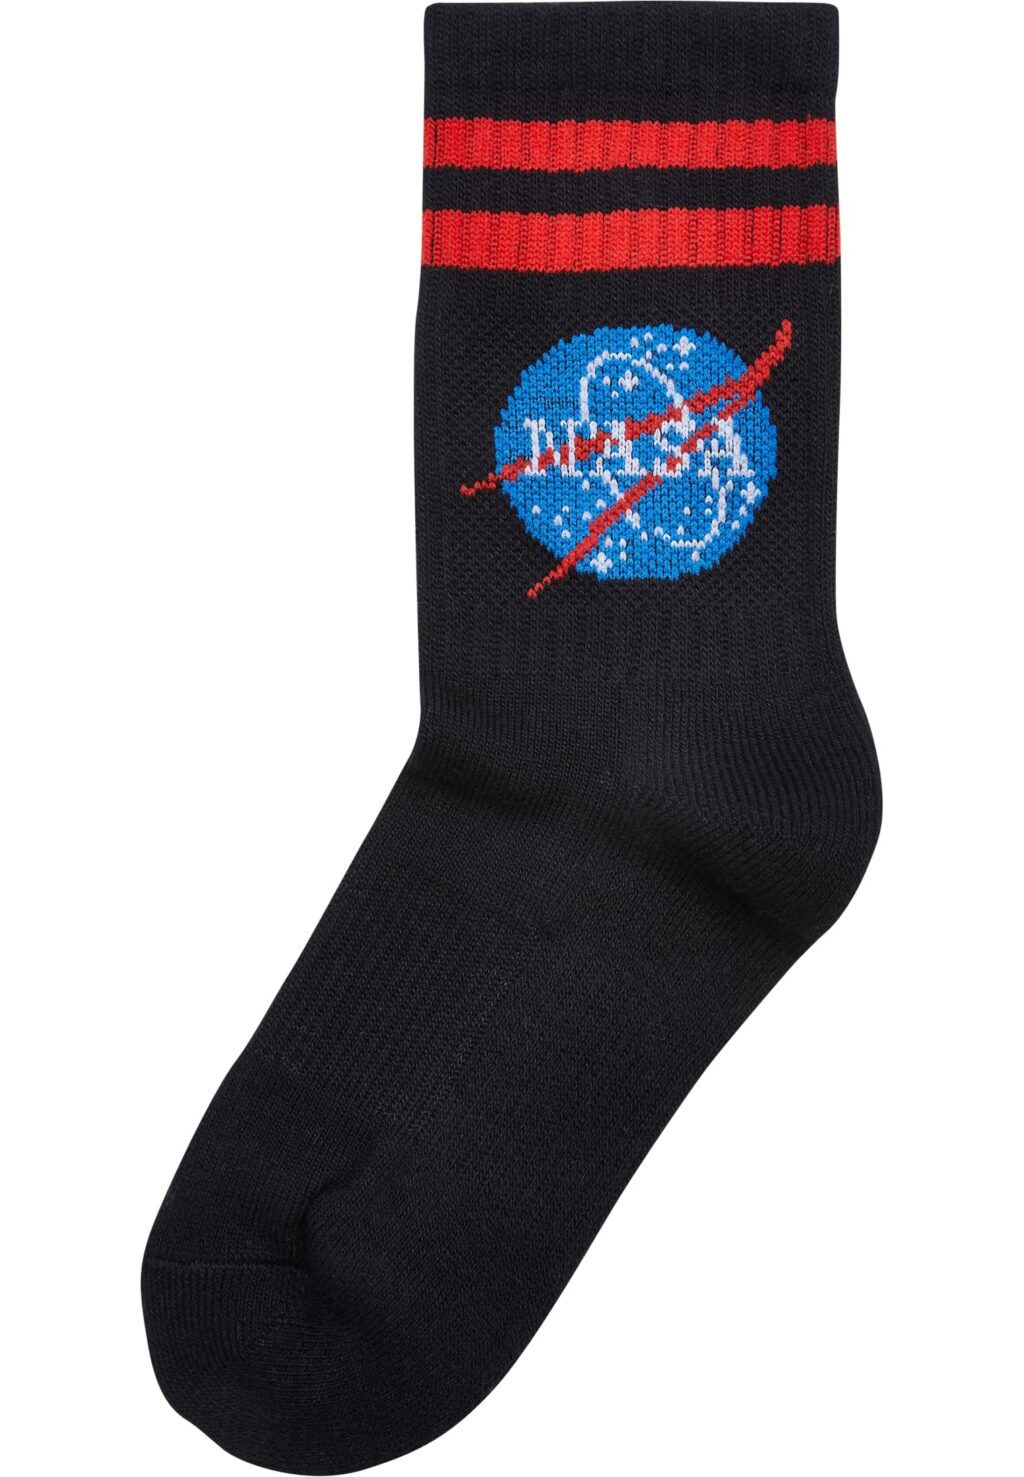 NASA Insignia Socks Kids 3-Pack white/black MTK2020